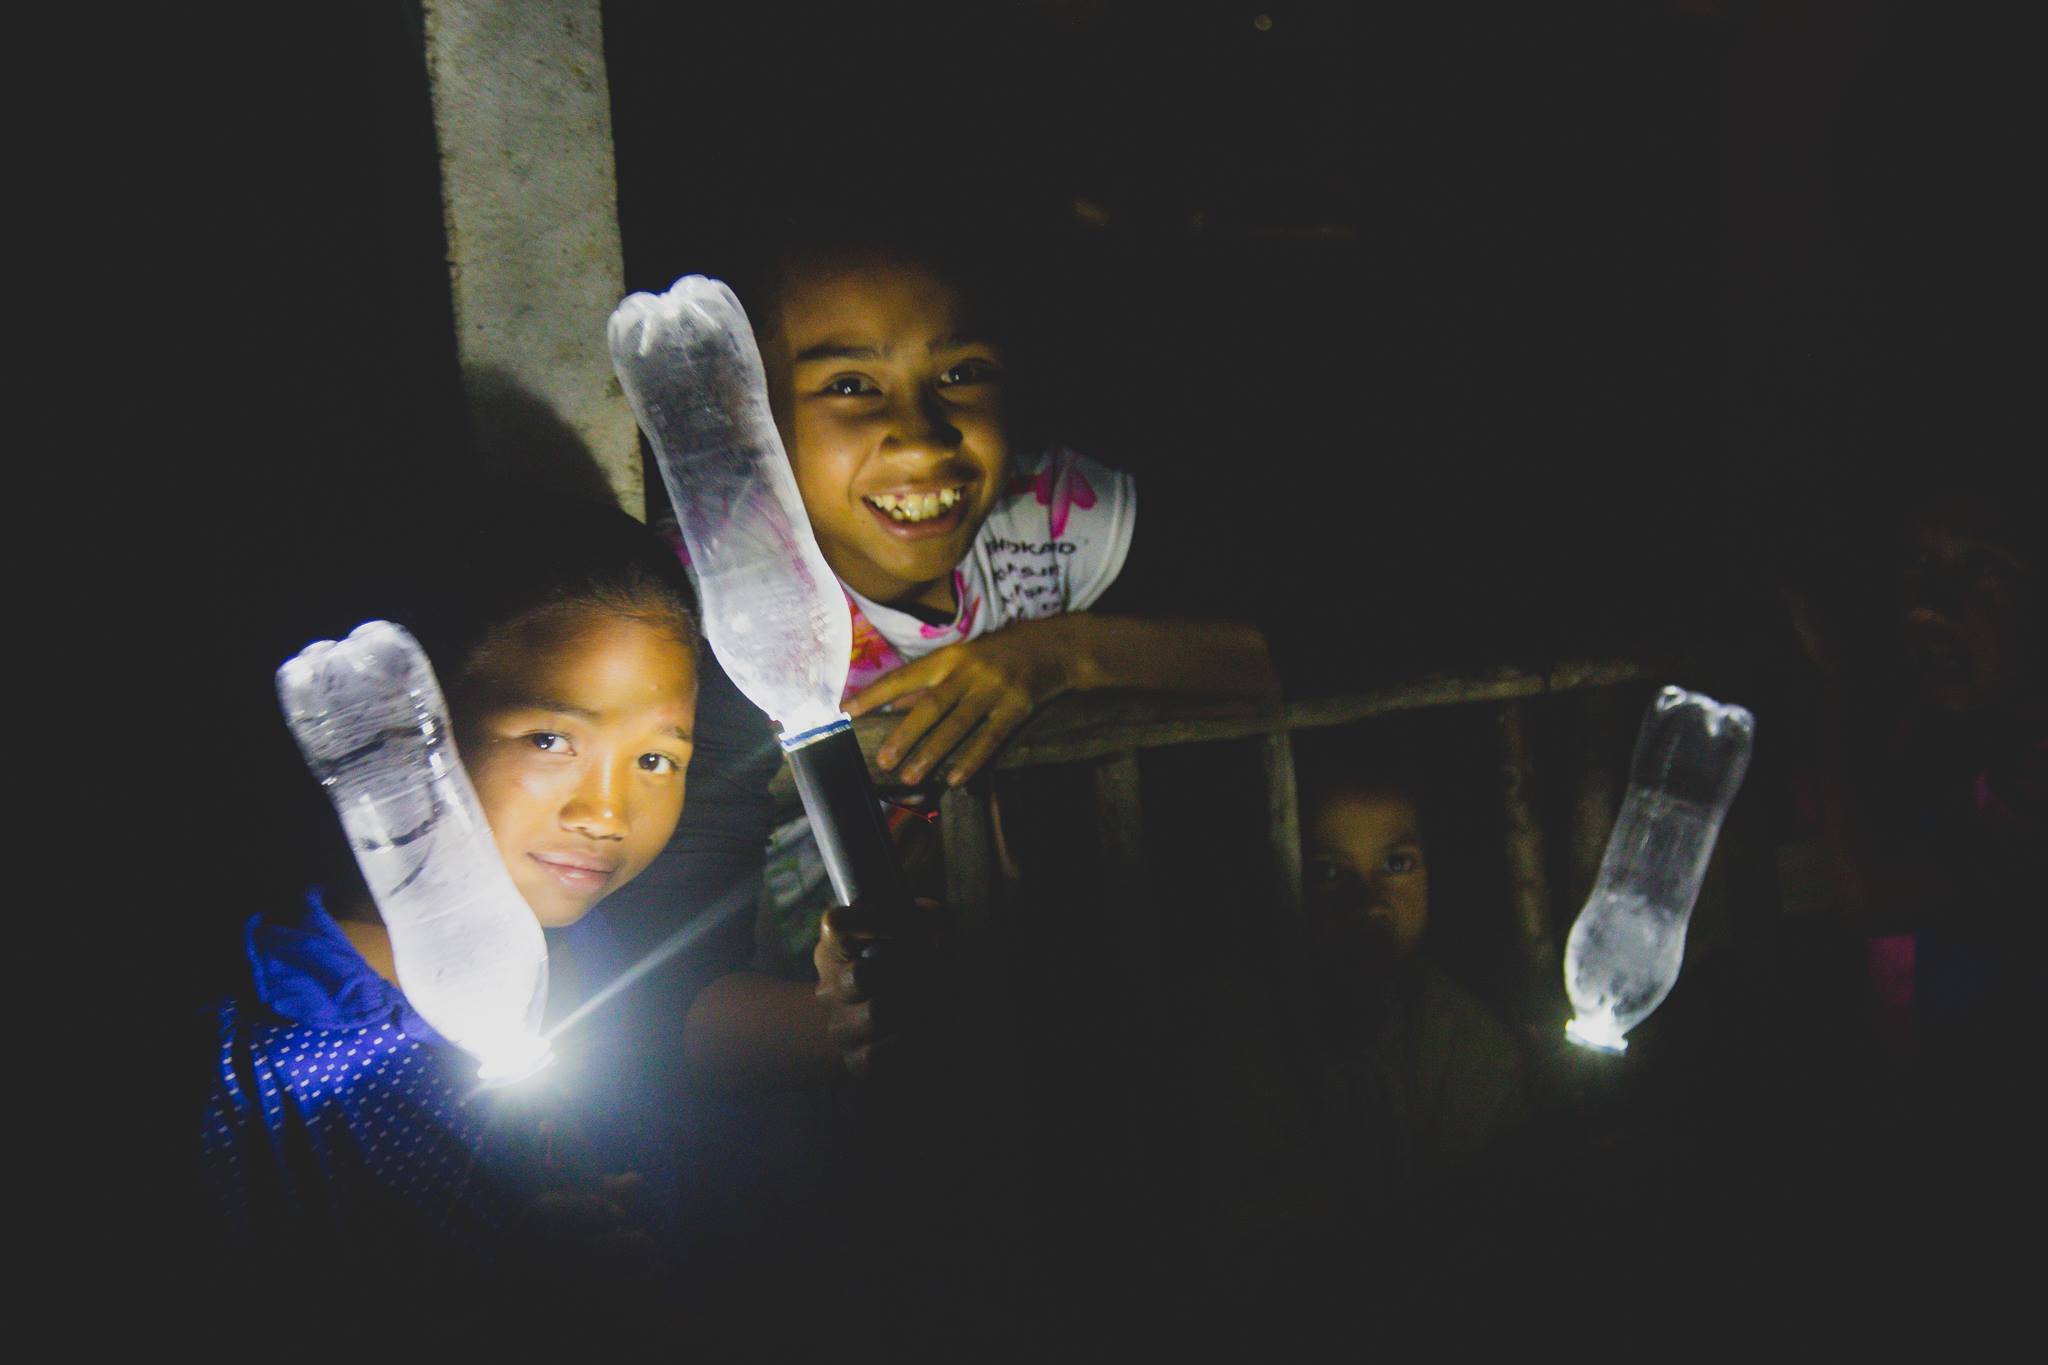 Orang Asli children enjoying the lights at night (Photo by Incitement)